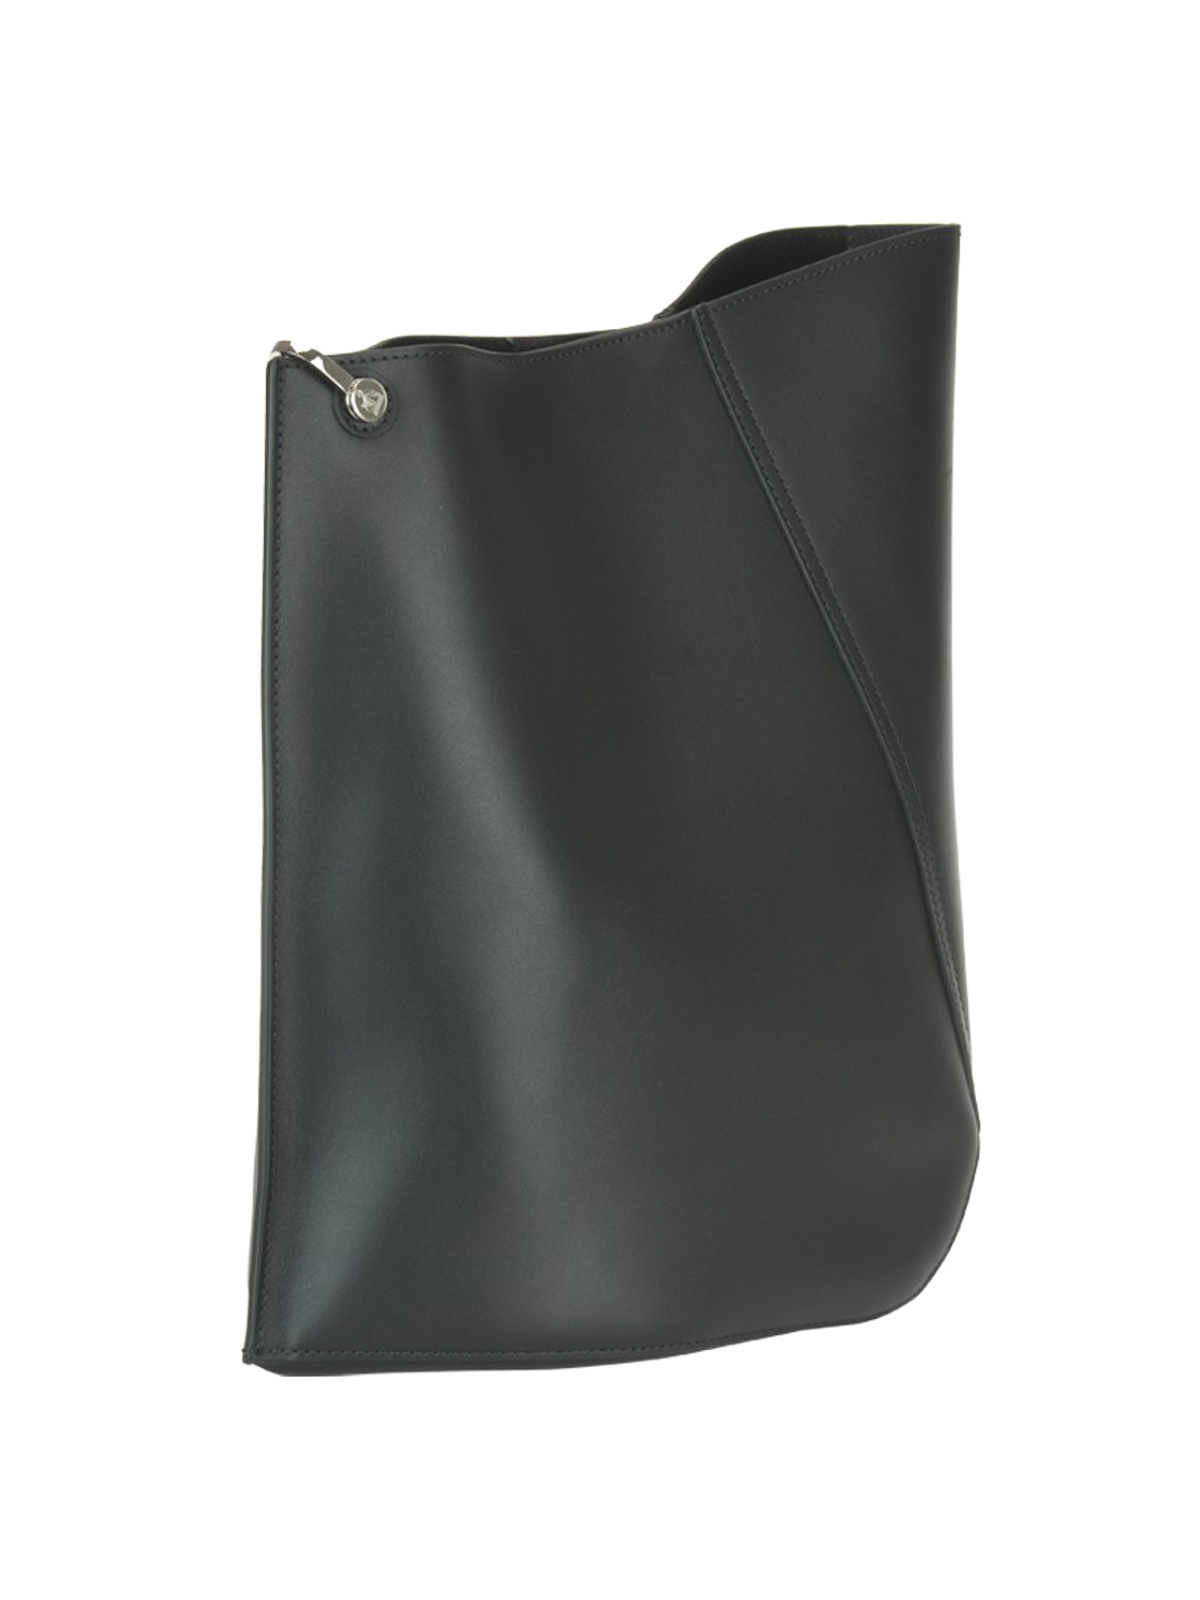 NEW Genuine Leather Black Bag / High Quality Tote Asymmetrical 